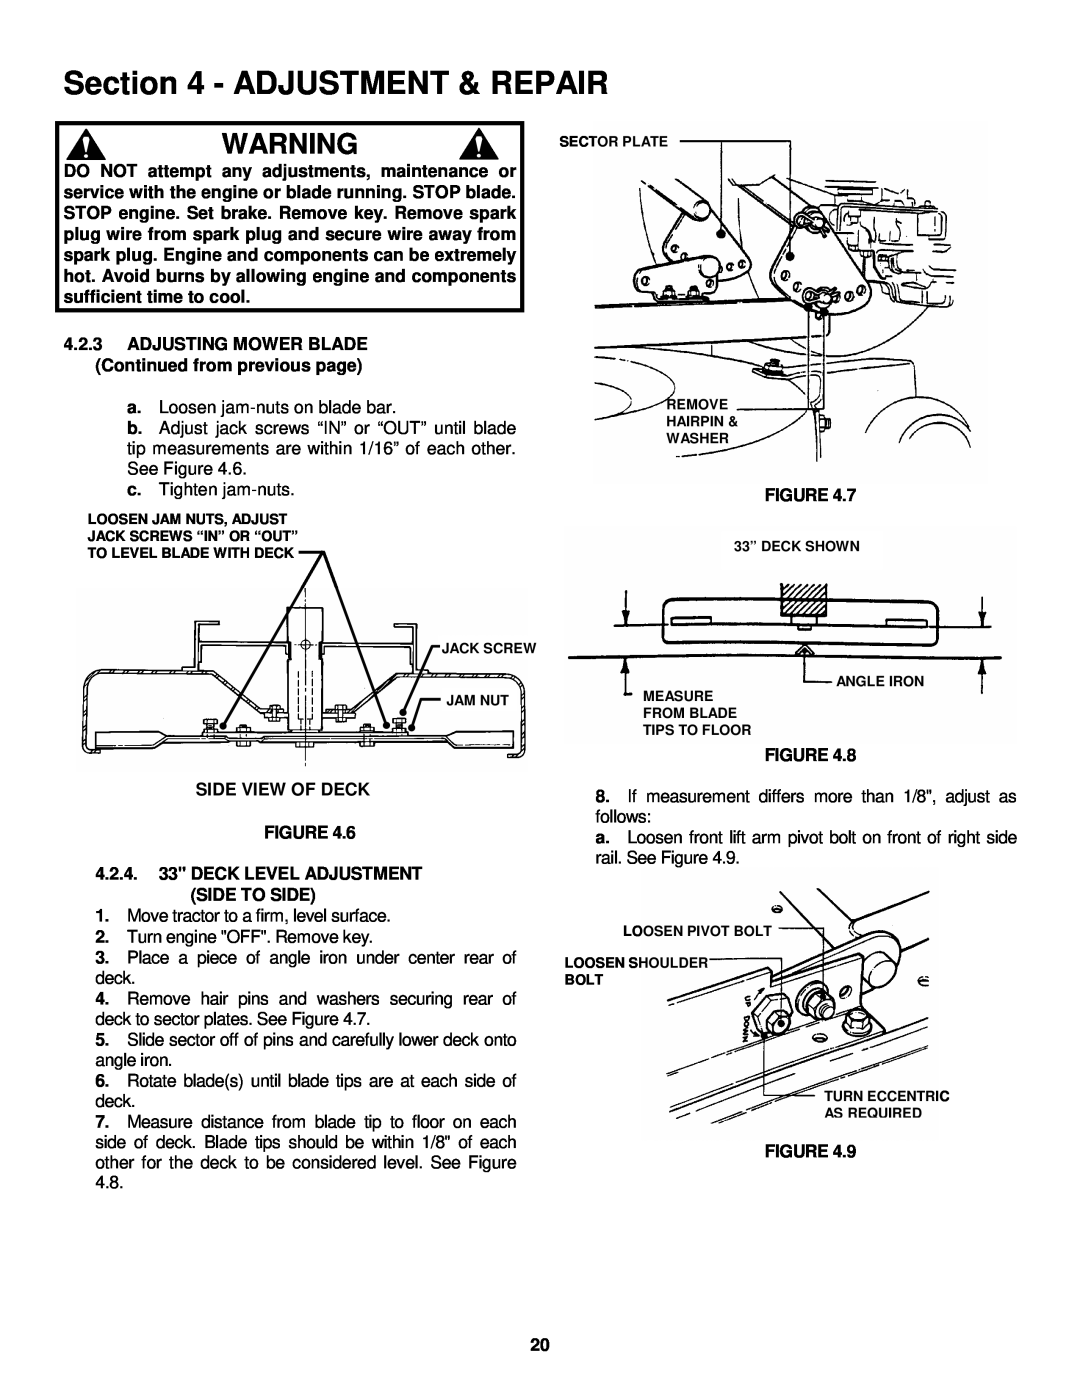 Snapper ELT145H33FBV important safety instructions Adjustment & Repair, Side View Of Deck Figure 